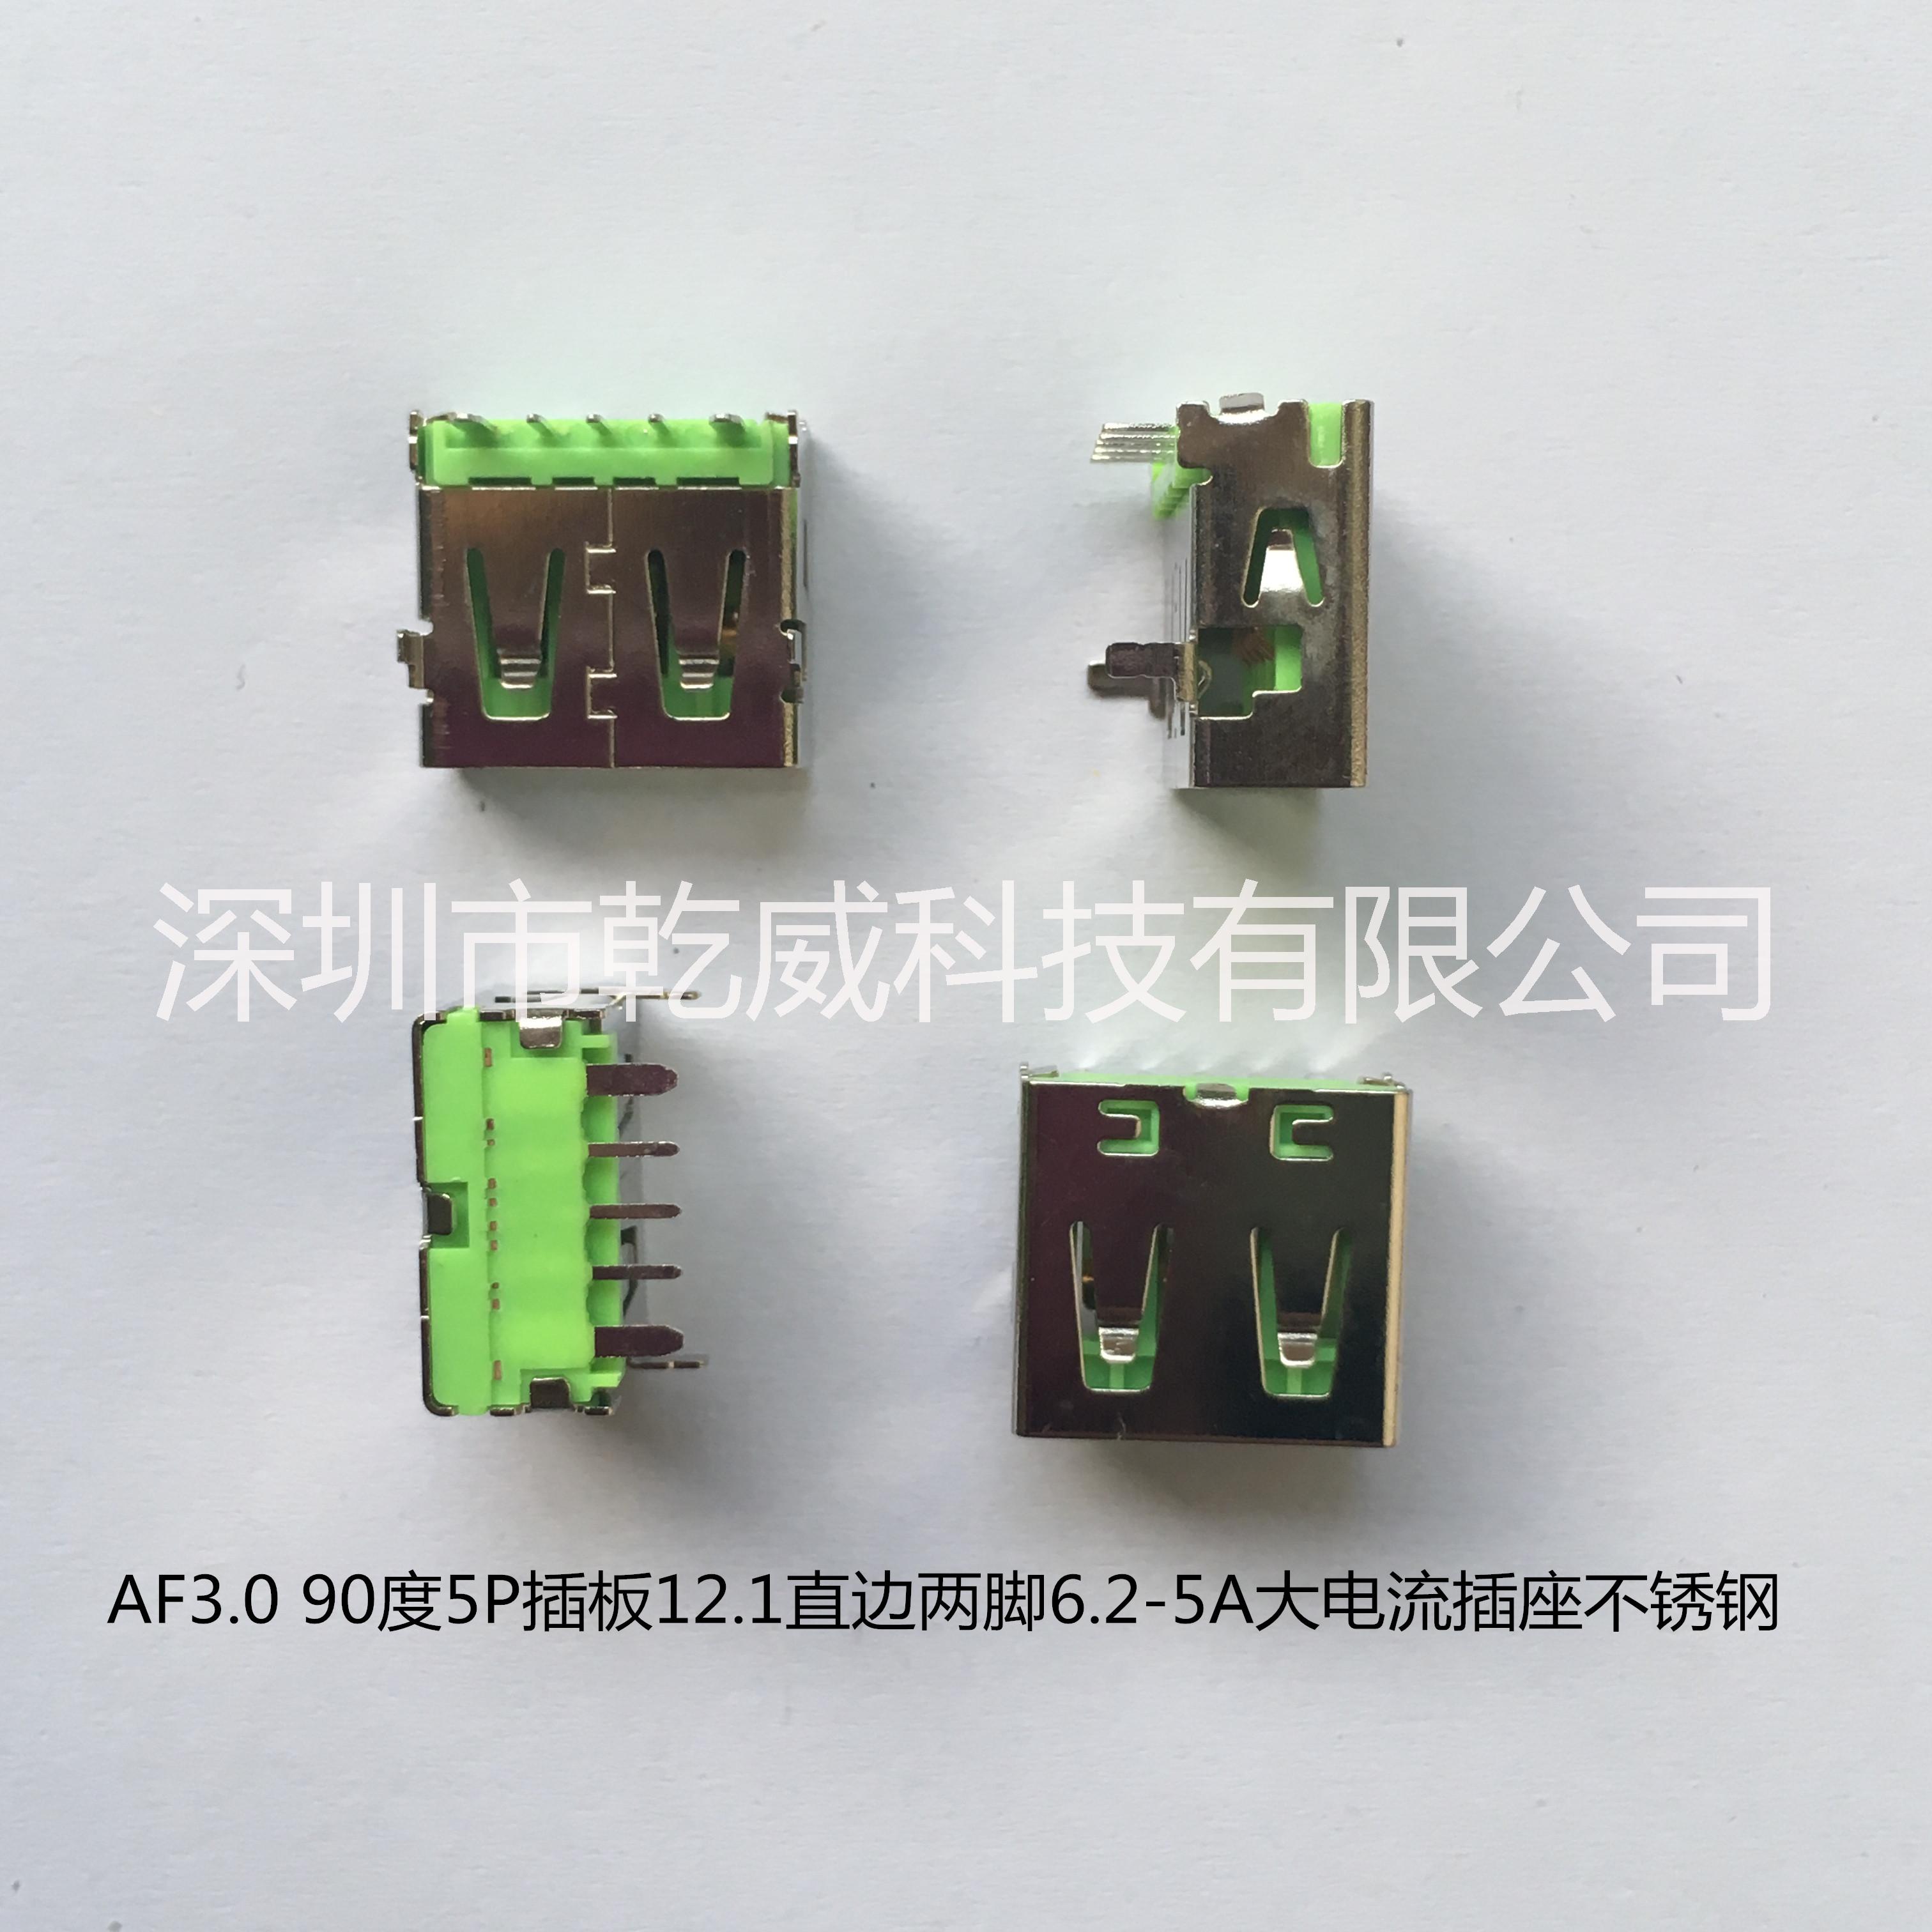 USB 3.0 母座 大电流绿色胶深圳3.0 90度5P插板12.1直边两脚6.2-5A大电流插座不锈钢